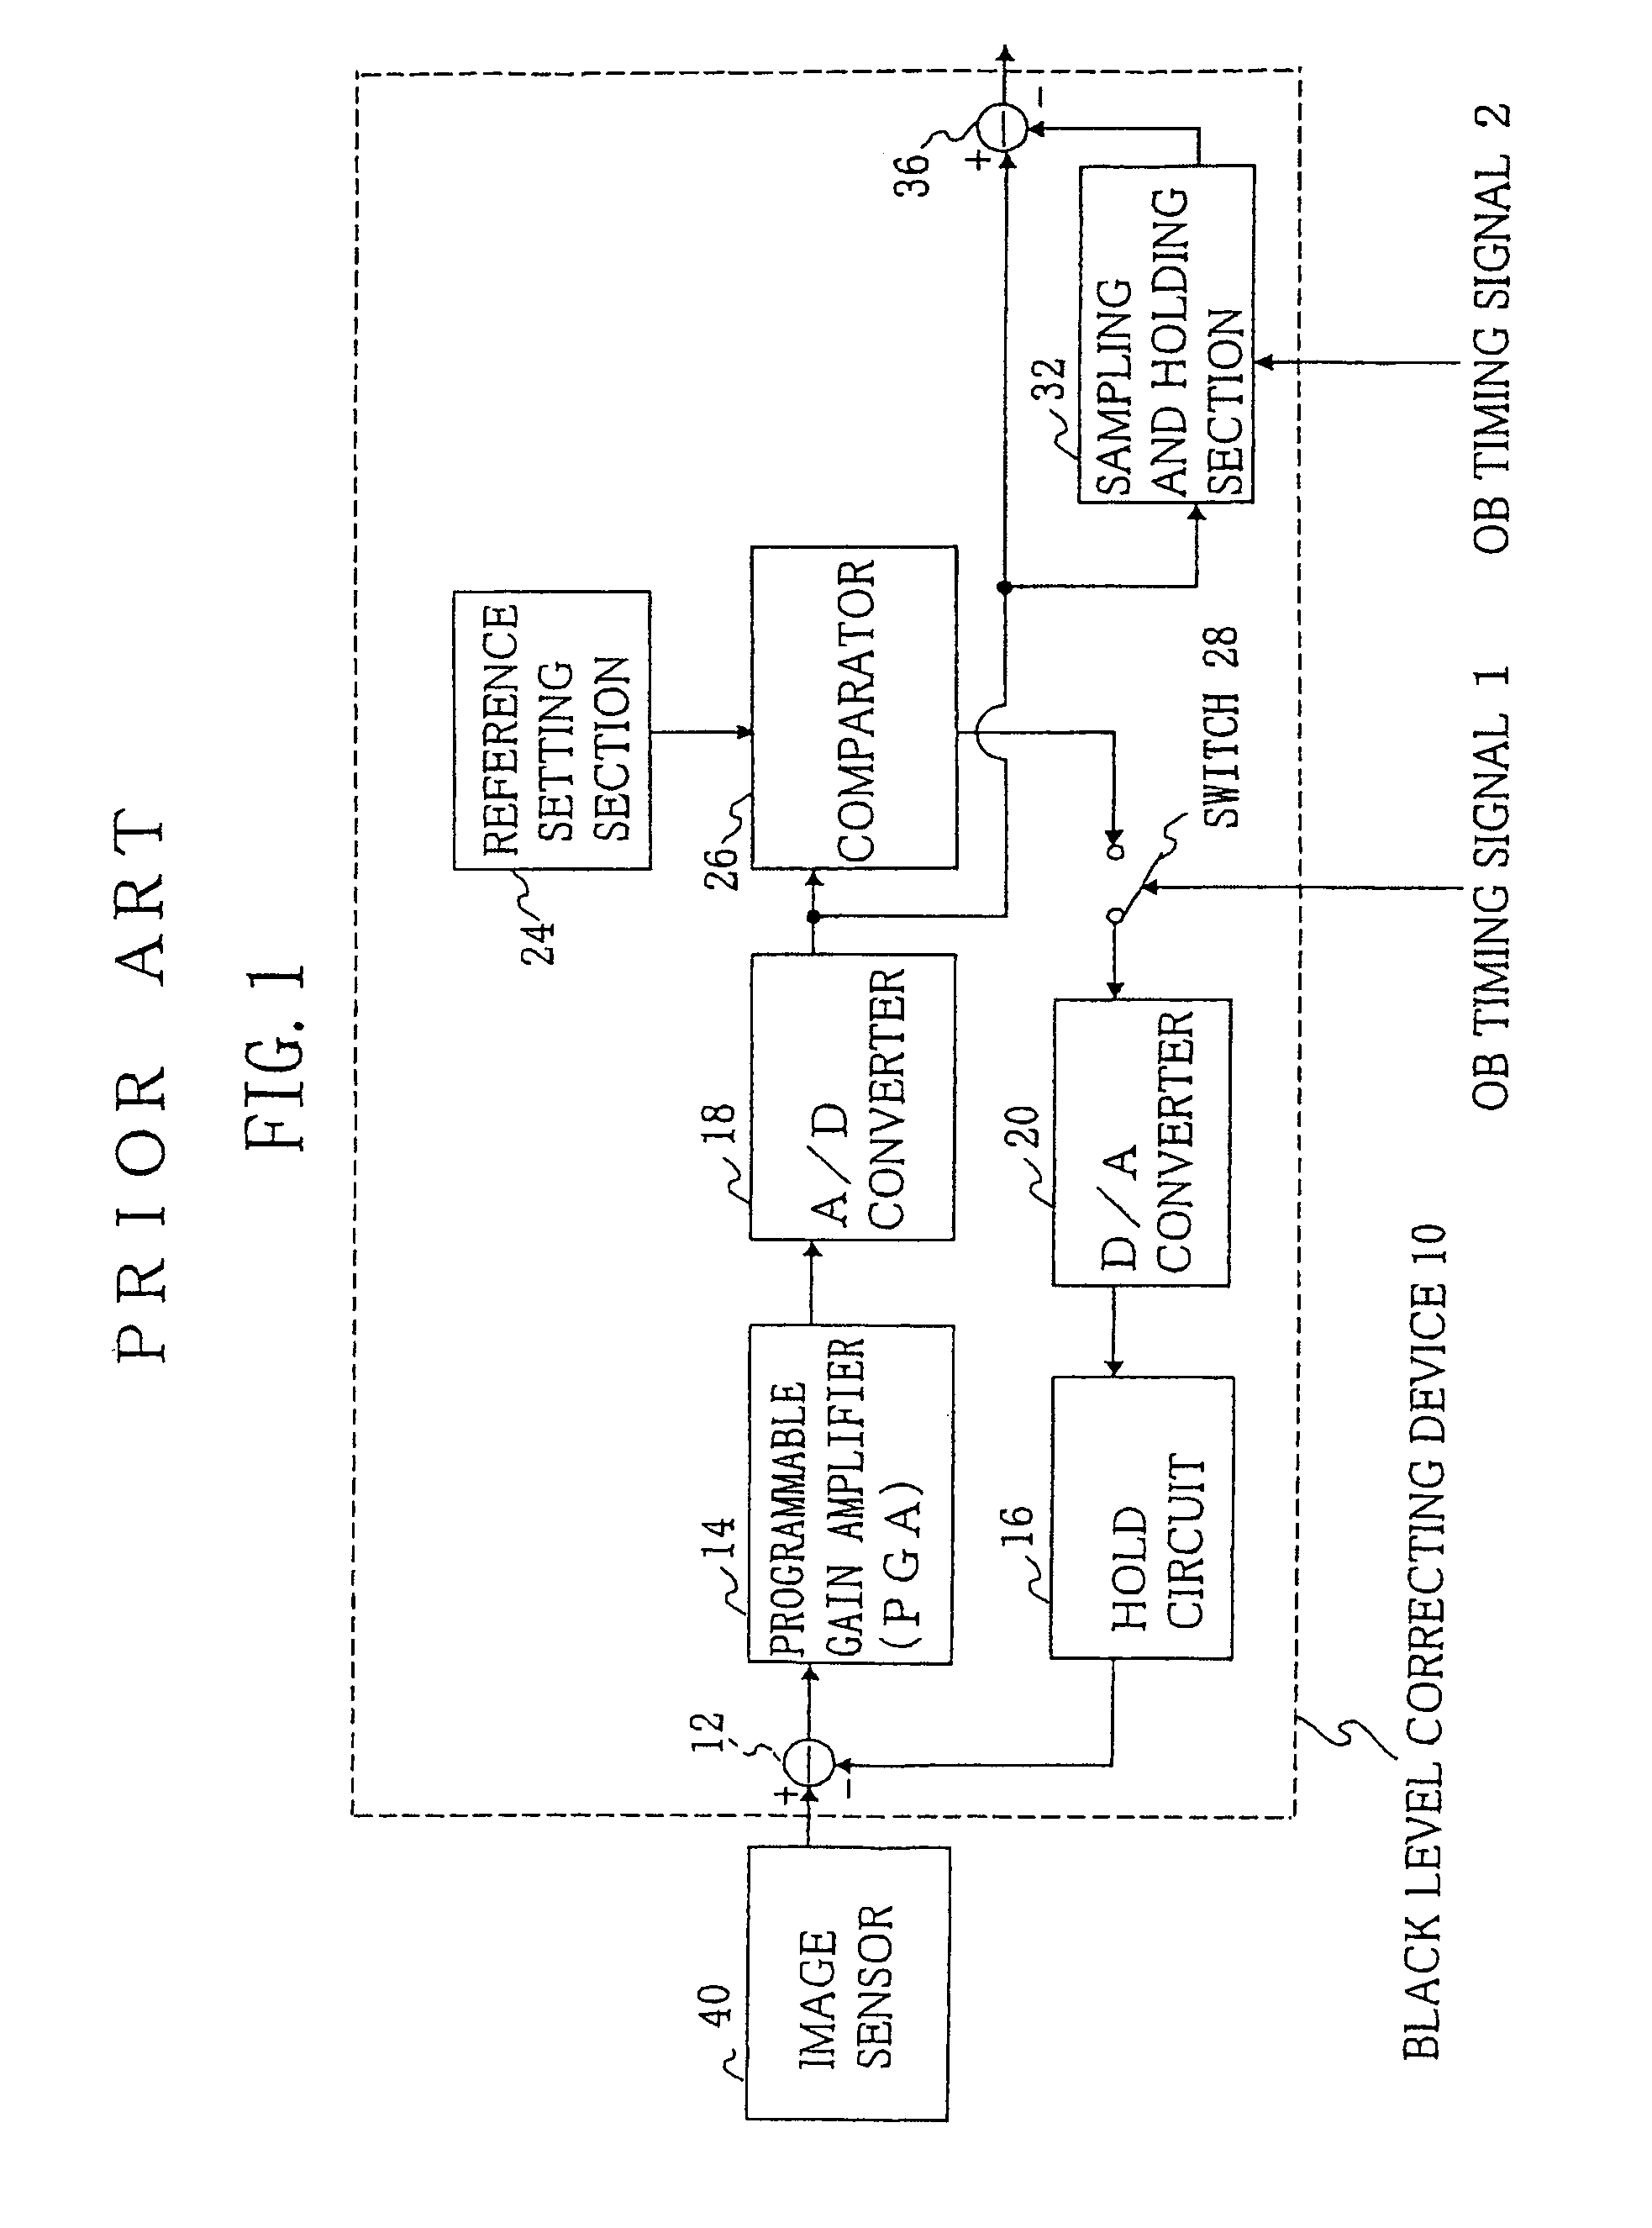 Black level correcting device and electronic camera